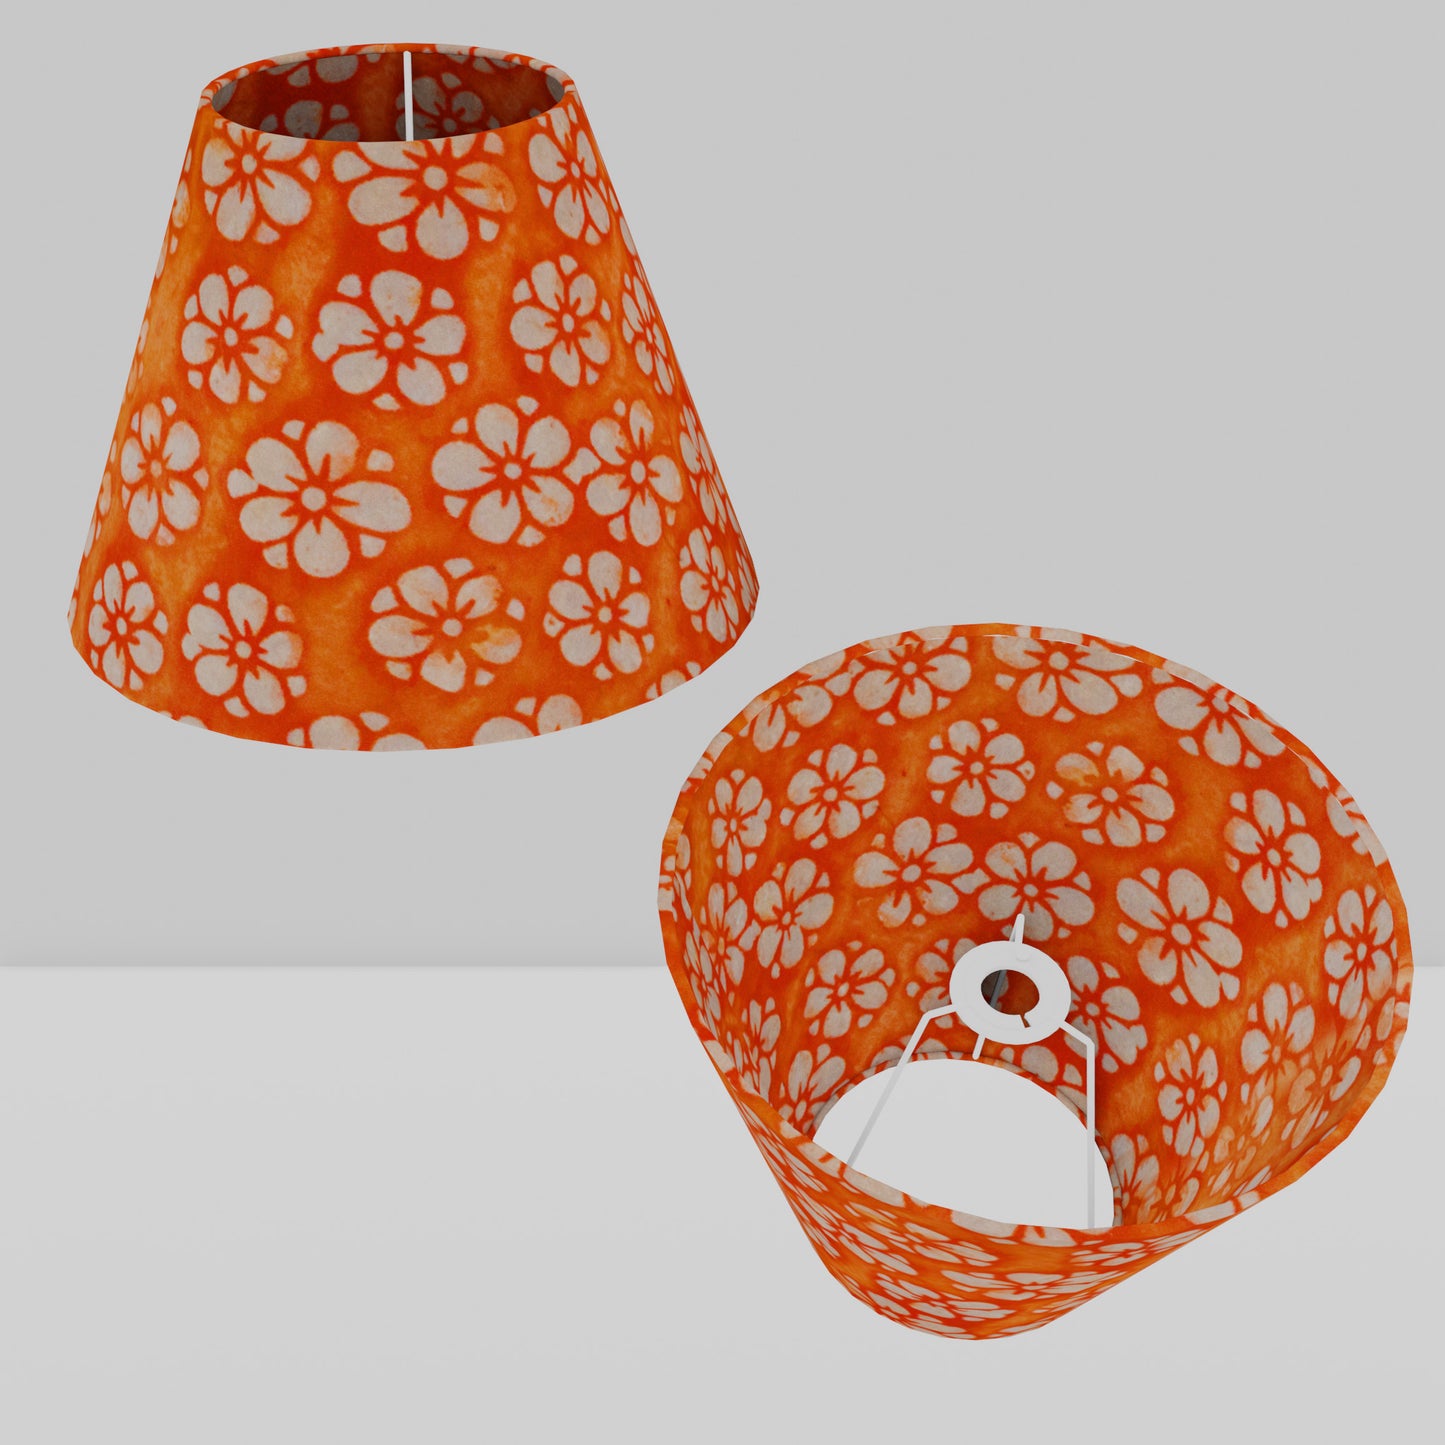 Conical Lamp Shade P94 - Batik Star Flower on Orange, 15cm(top) x 30cm(bottom) x 22cm(height)